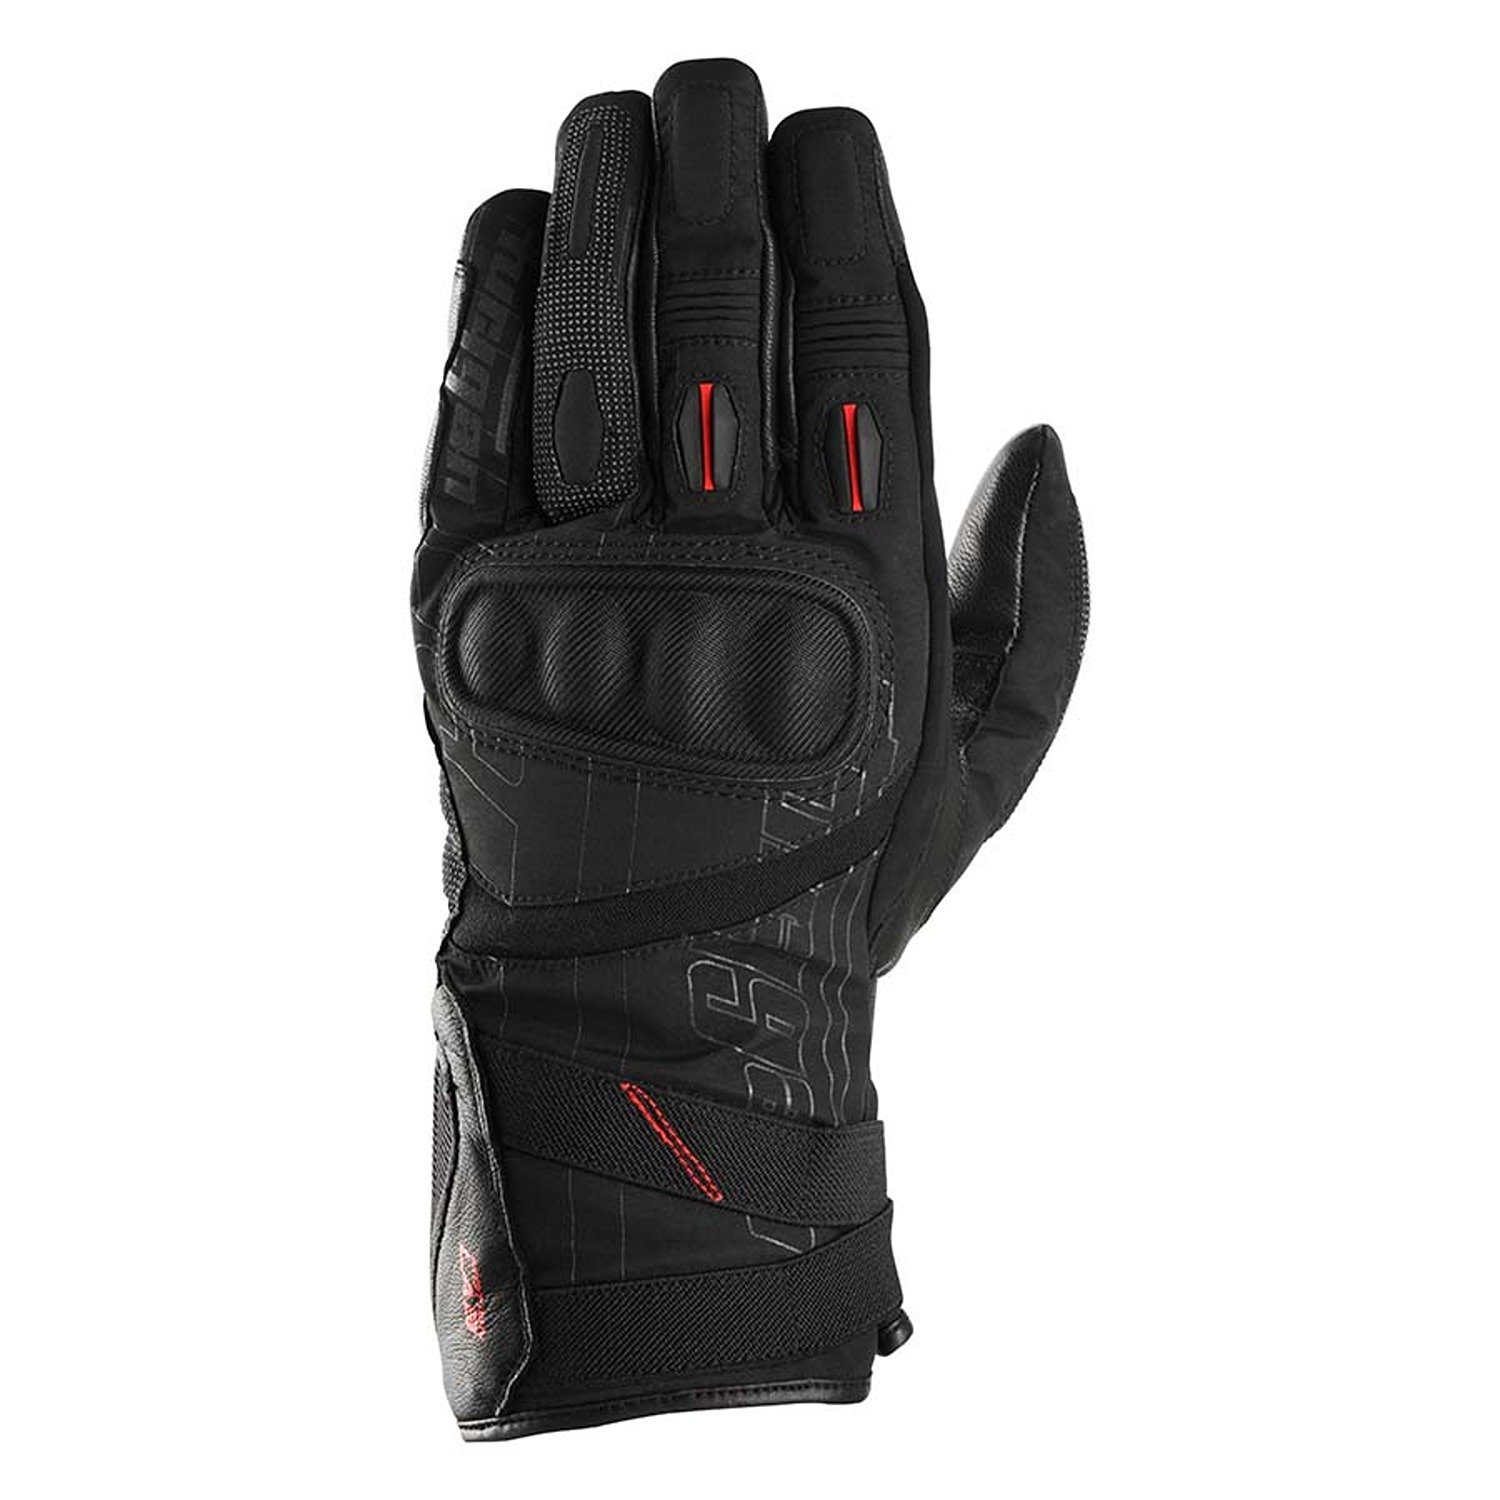 Image of Furygan Nomad Gloves Black Size S ID 3435980373320